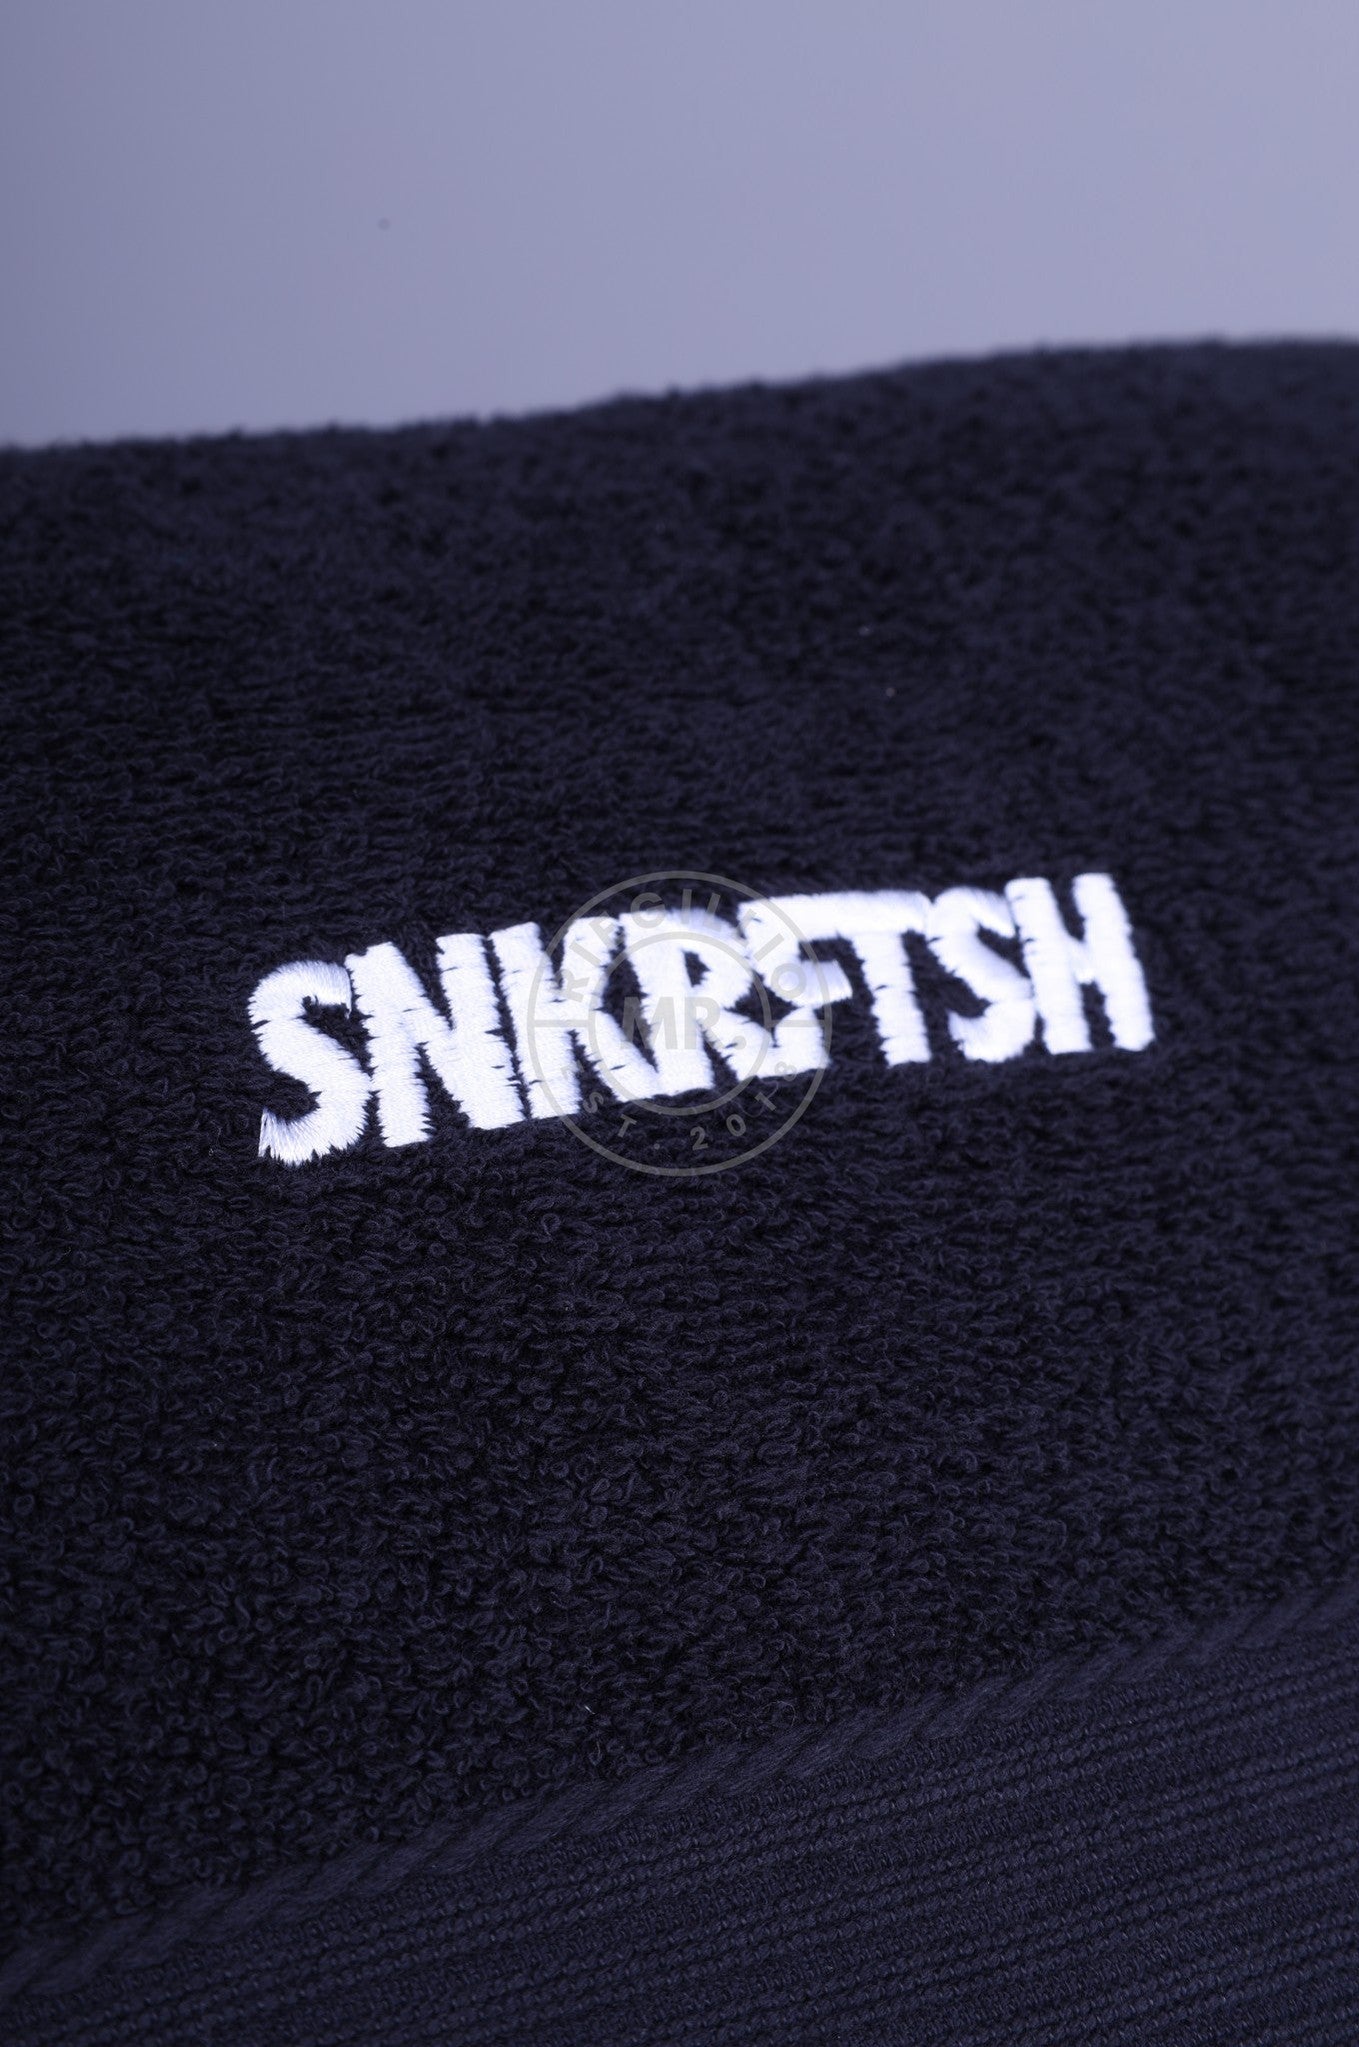 SNKRFTSH Beach Towel 180 x 100 cm-at MR. Riegillio